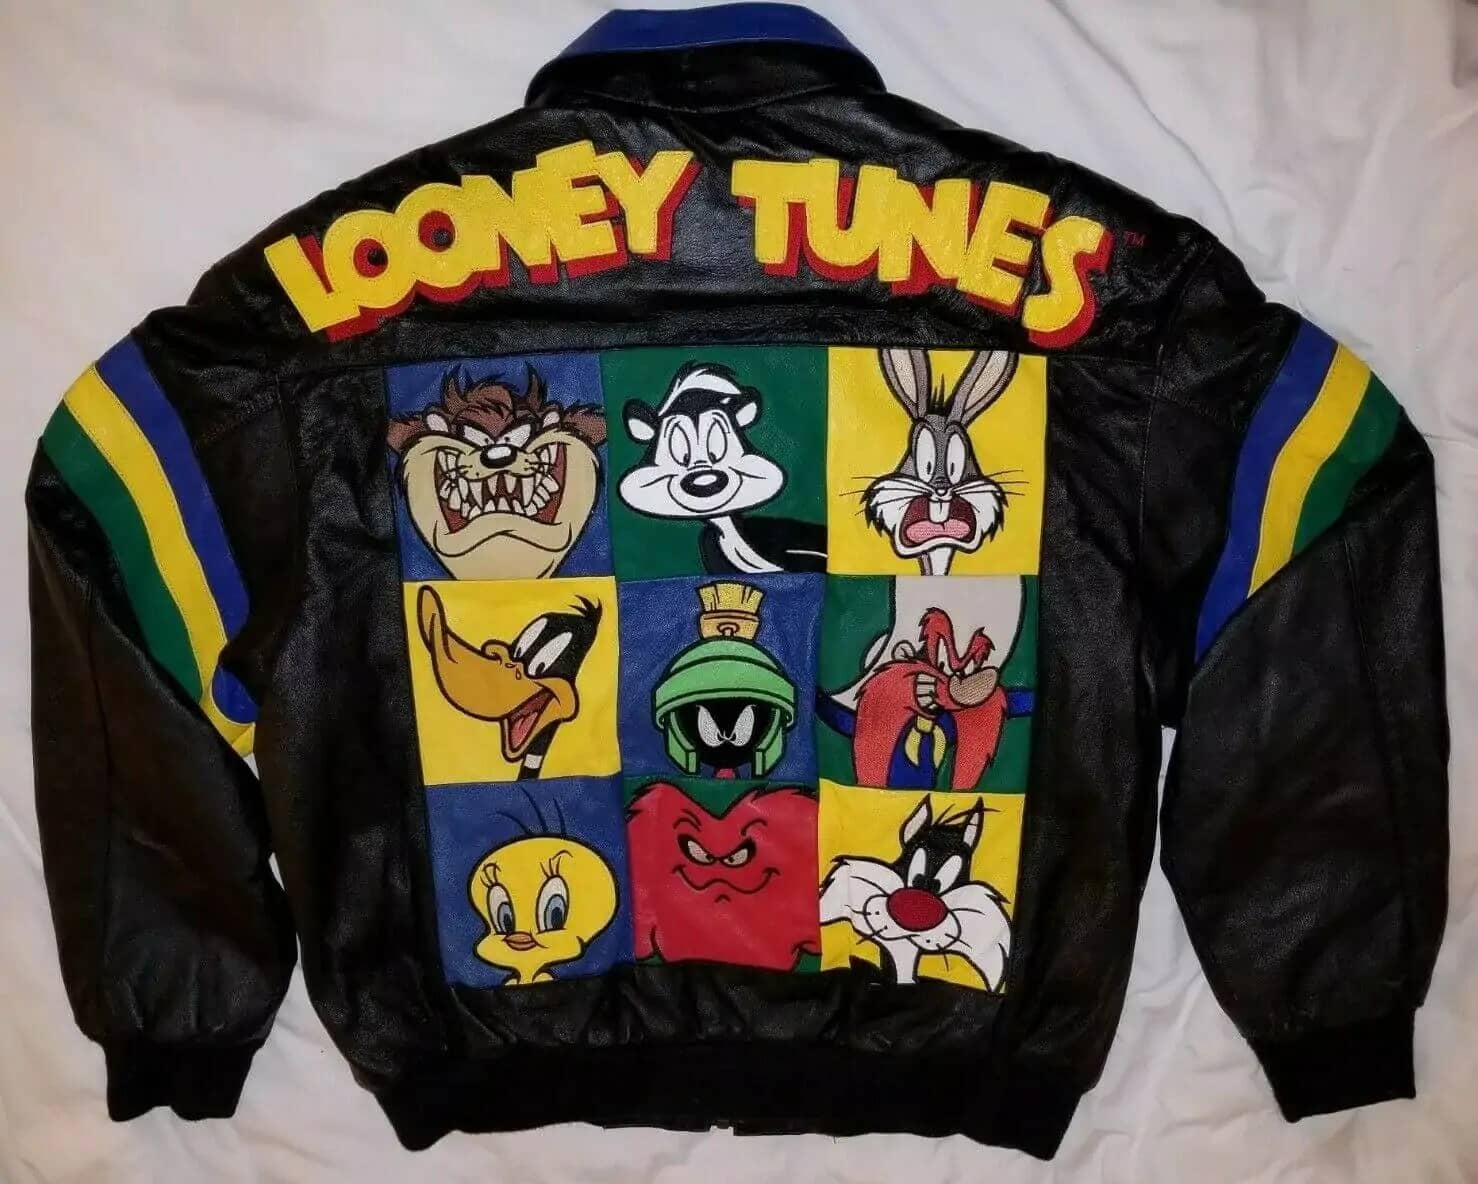 Vintage 90s Looney Tunes Leather Jacket - Bombers Jacket